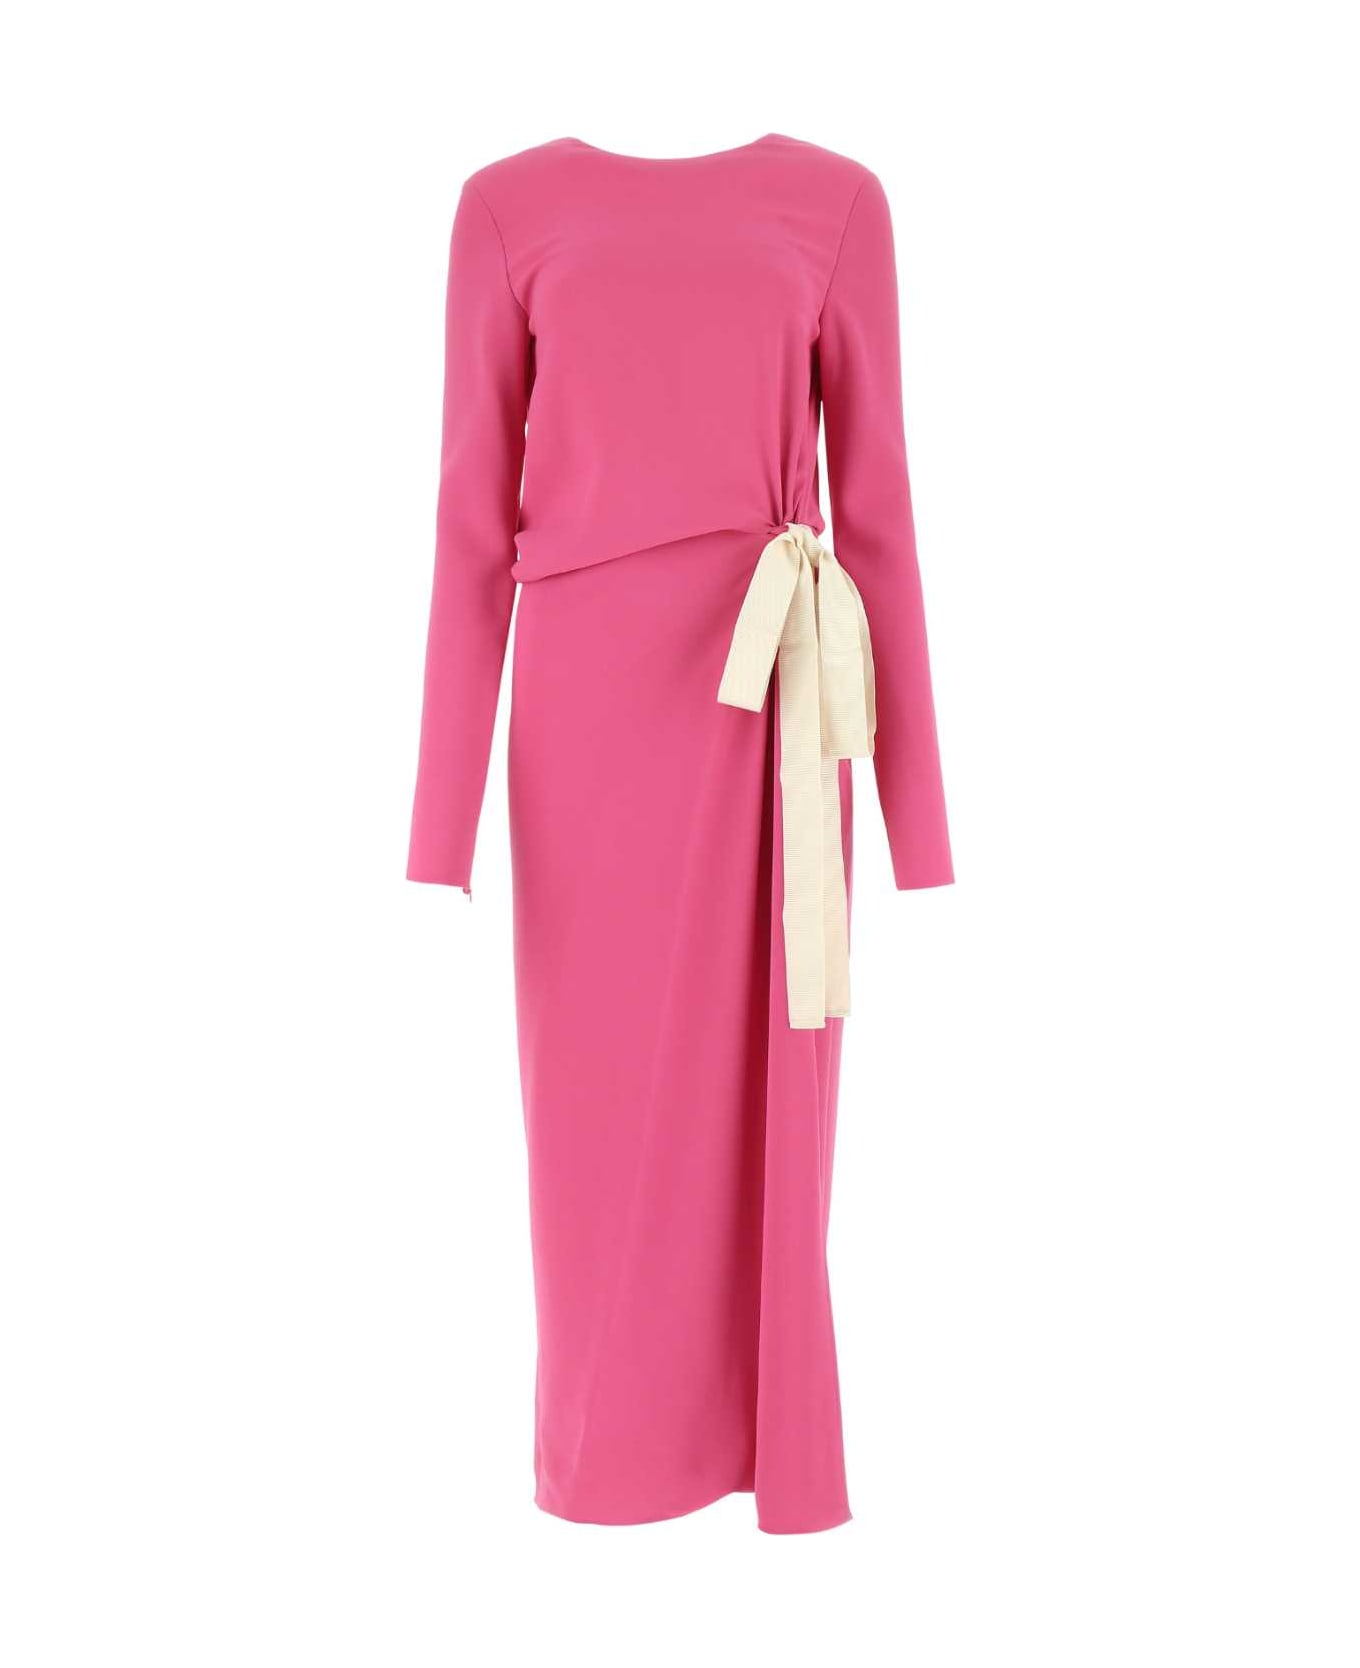 Lanvin Dark Pink Stretch Crepe Long Dress - 55